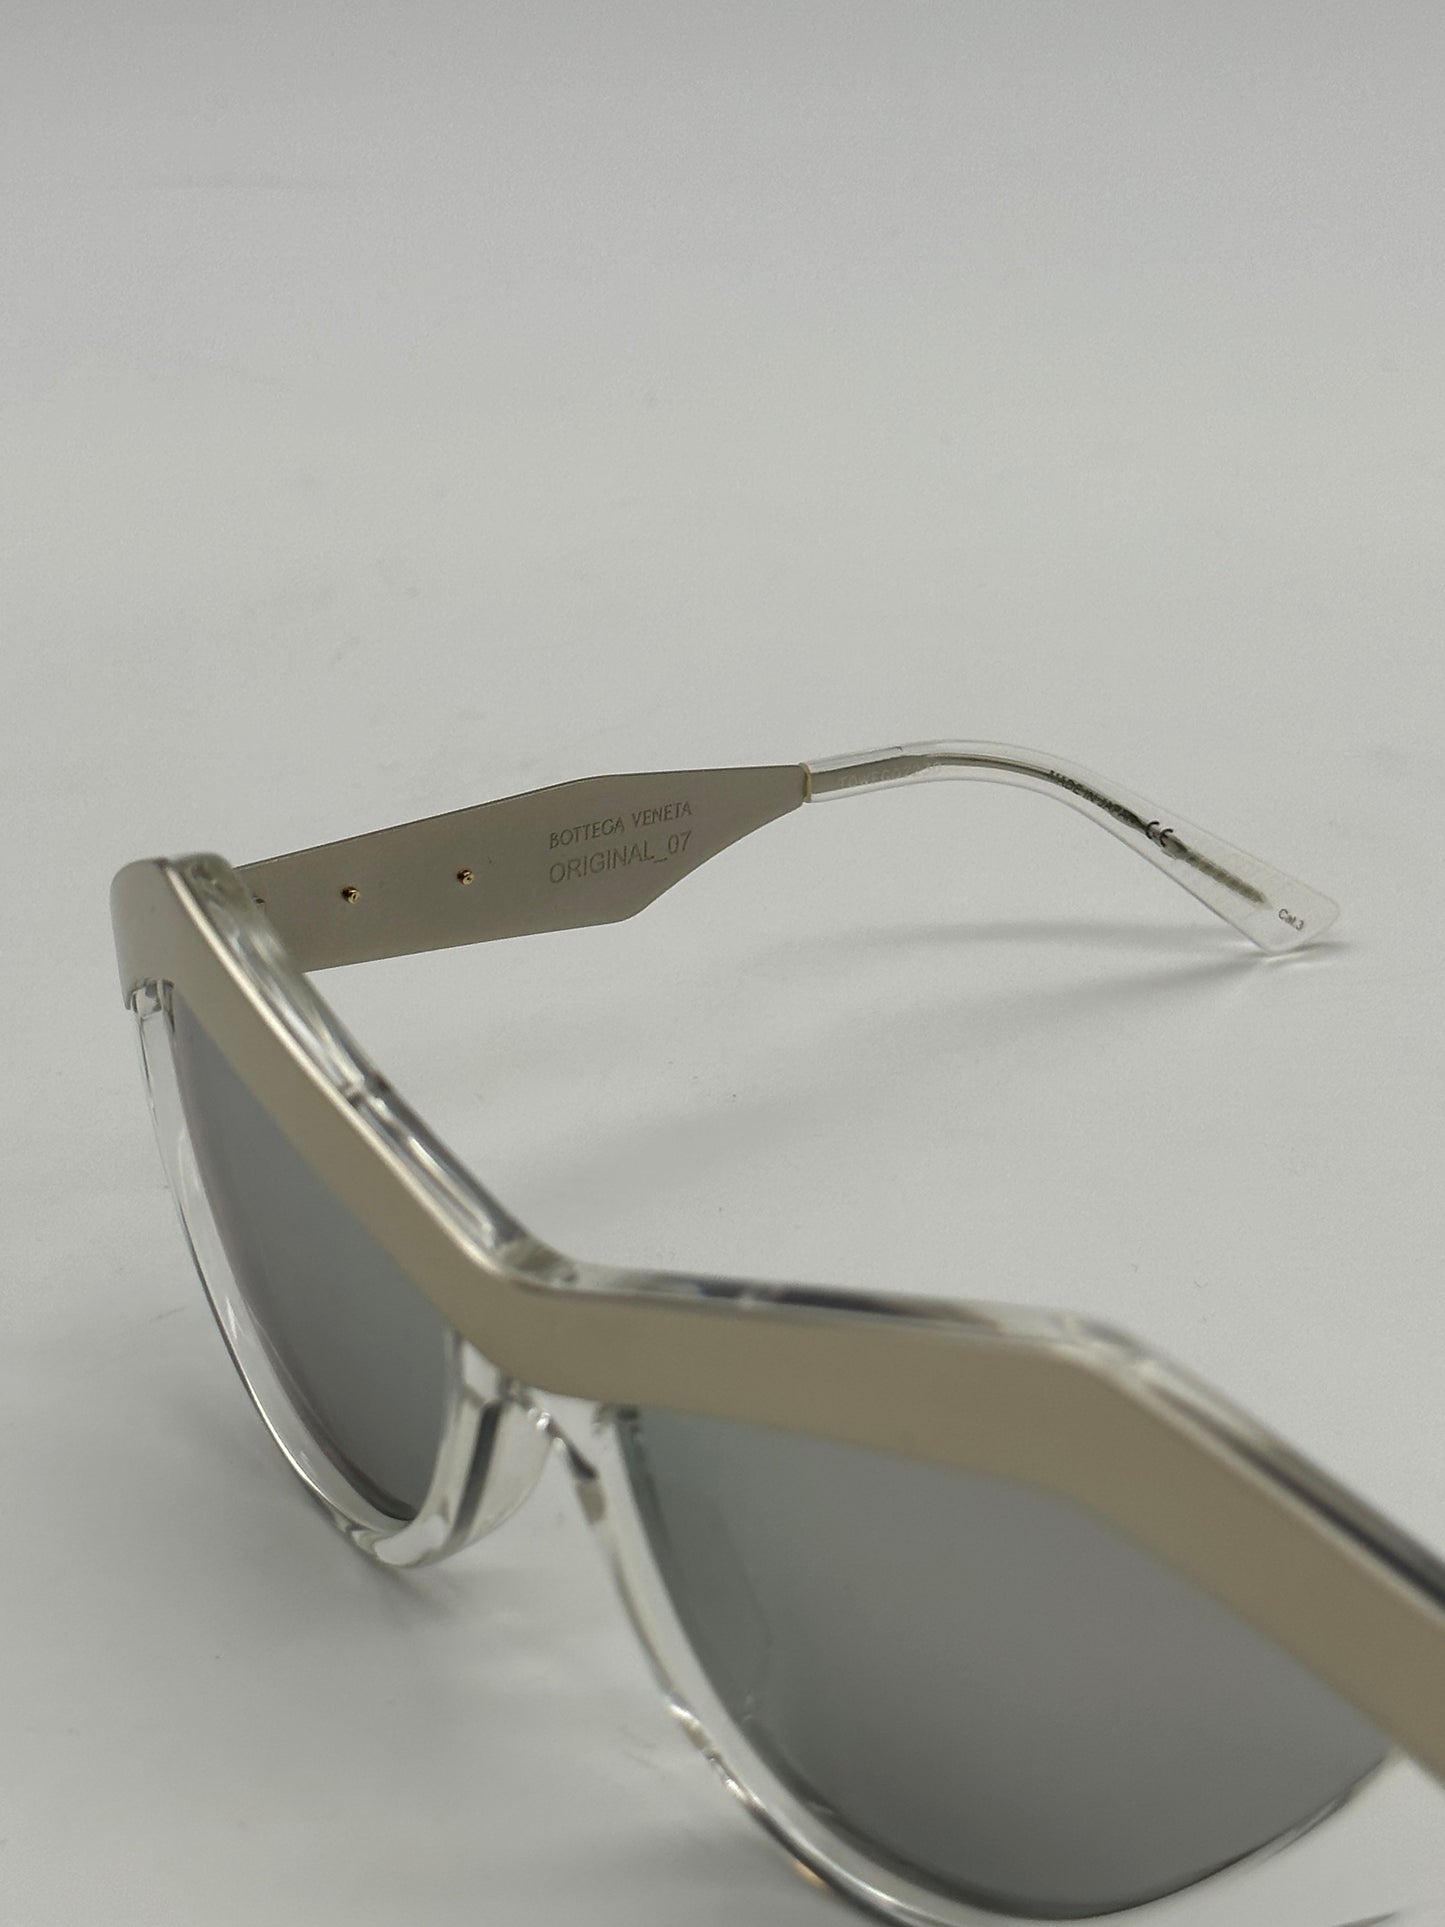 Silver Cat-eye Sunglasses